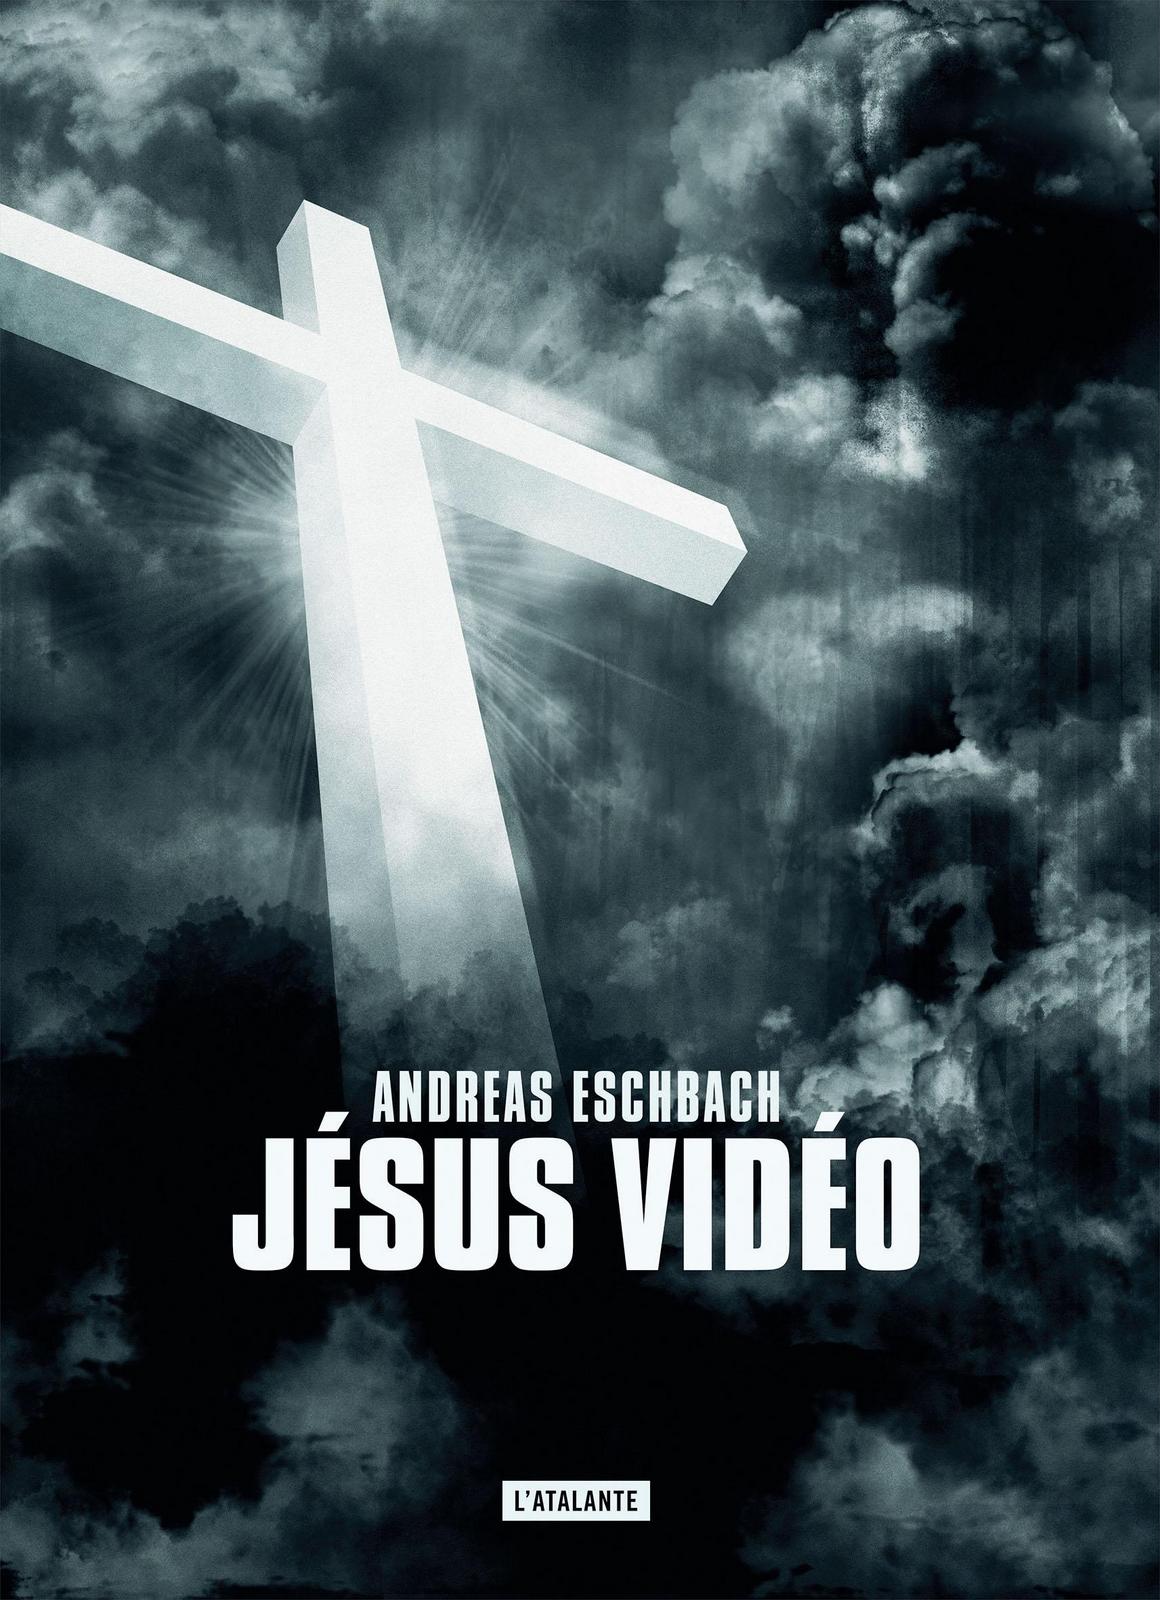 Andreas Eschbach: Jésus vidéo (French language, 2016)